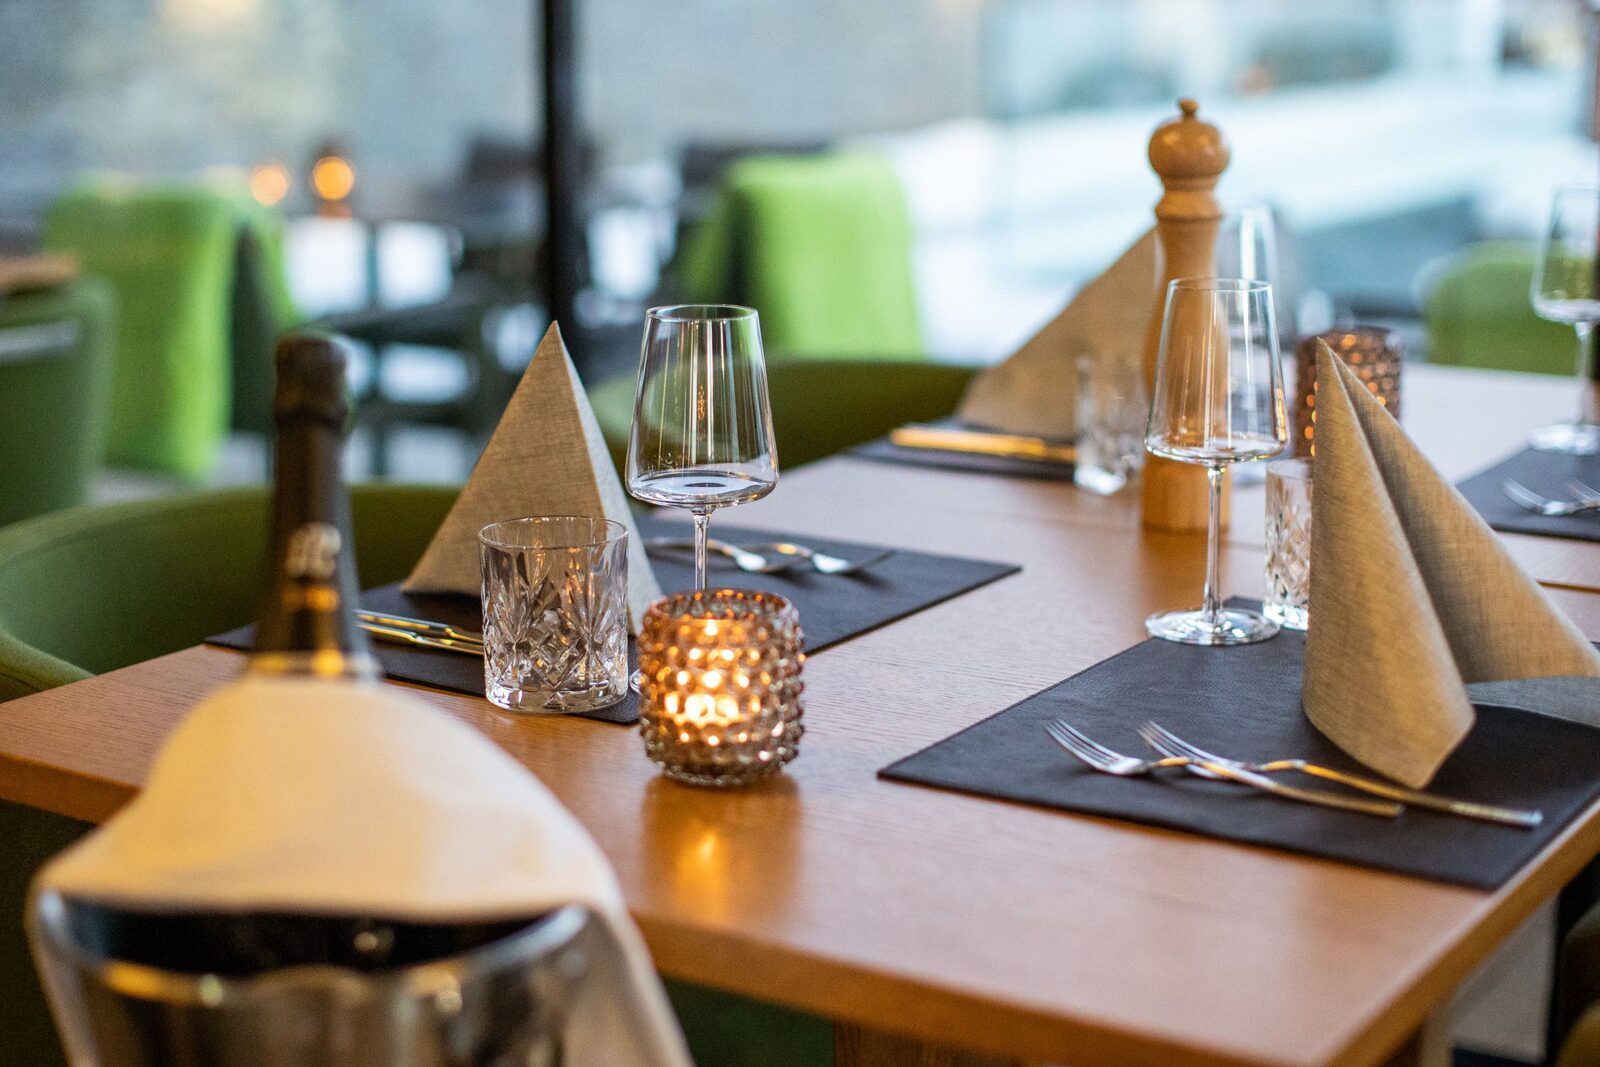 Off Course Alpenbrasserie & Bar crowned Best Cafeteria 2023 by Restaurant Guru